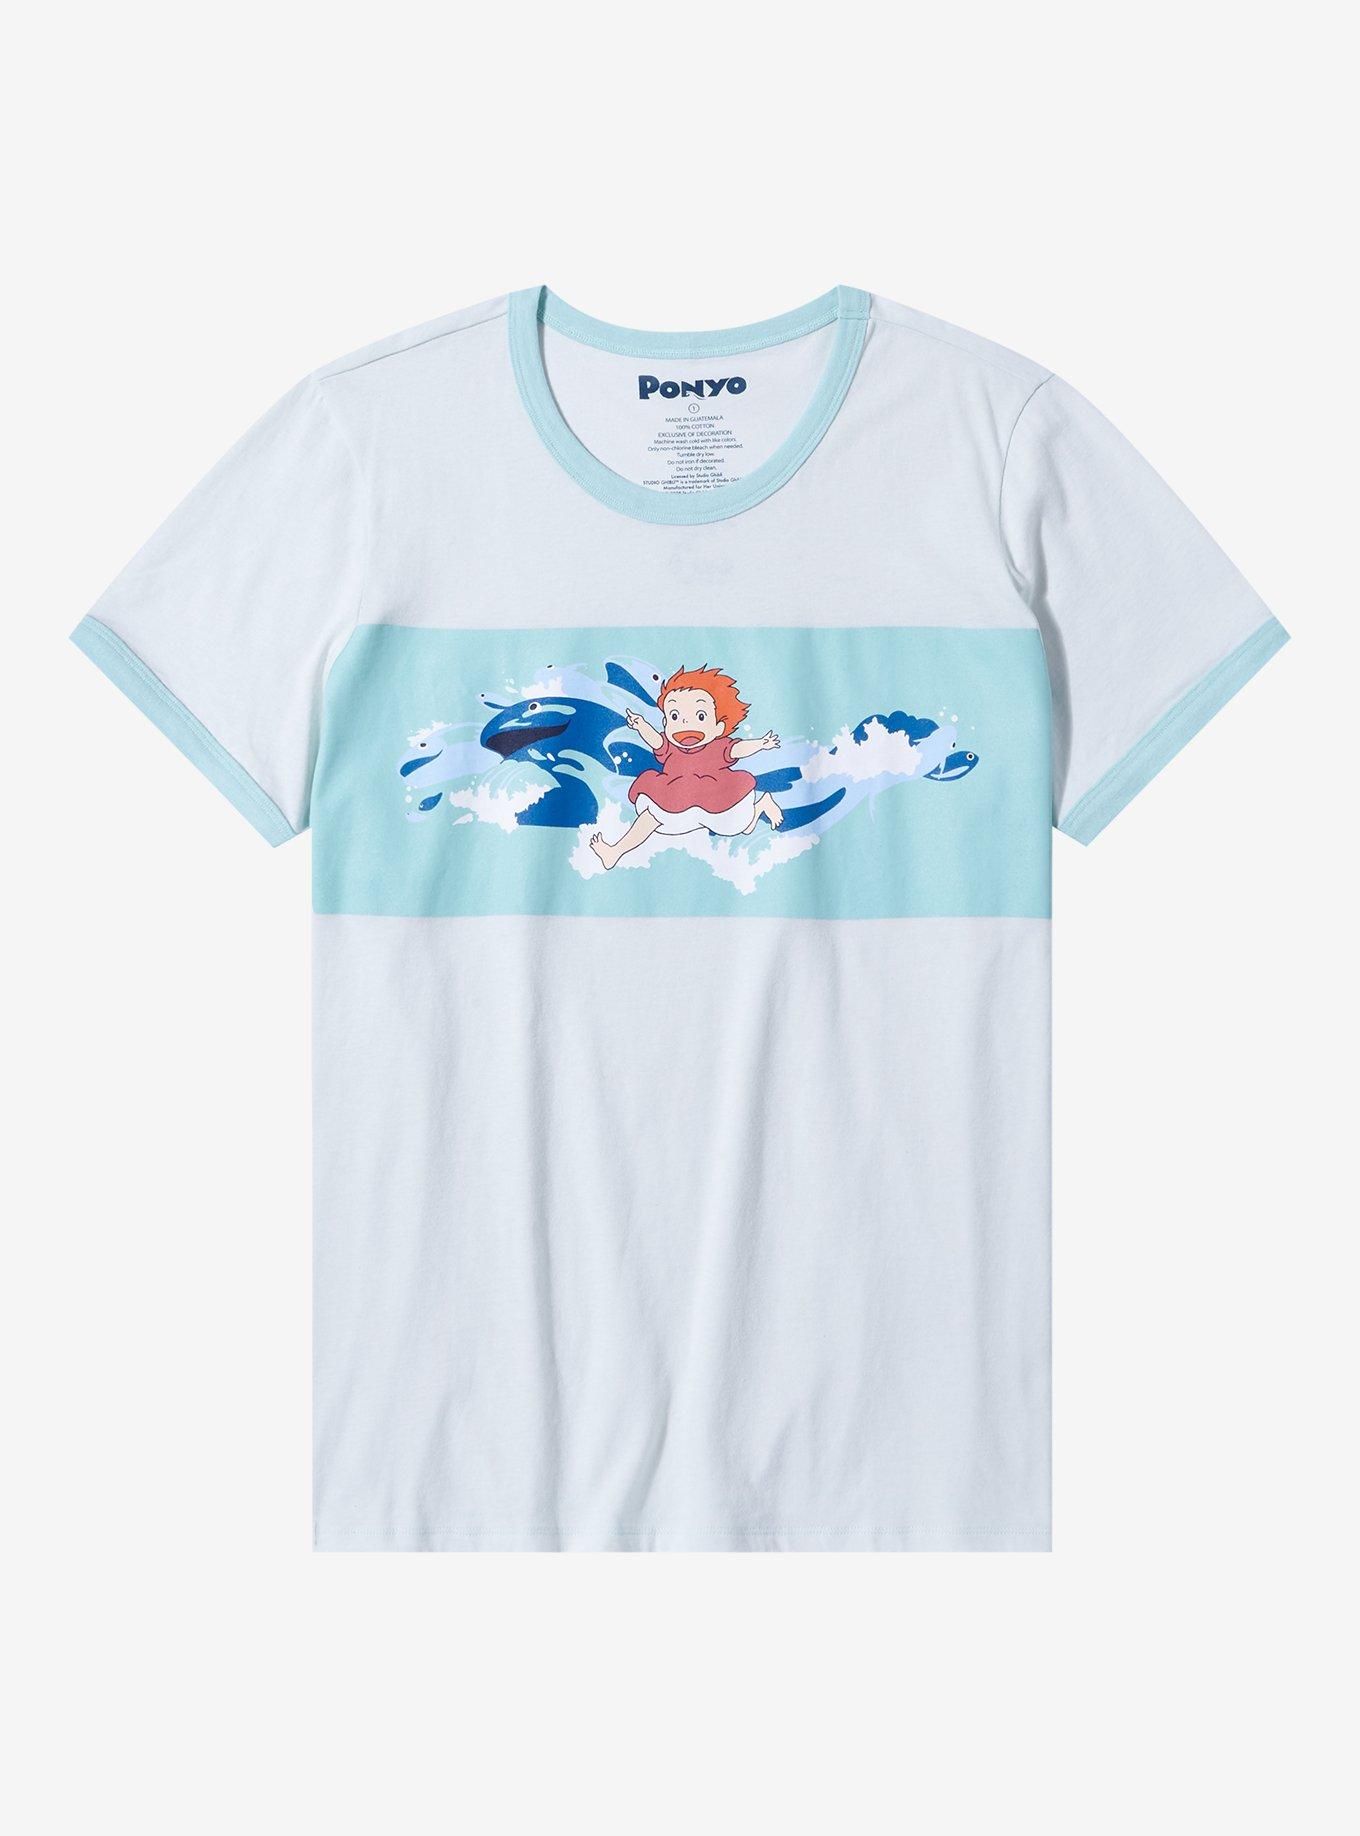 Her Universe Studio Ghibli Ponyo Stripe Girls Ringer T-Shirt Plus